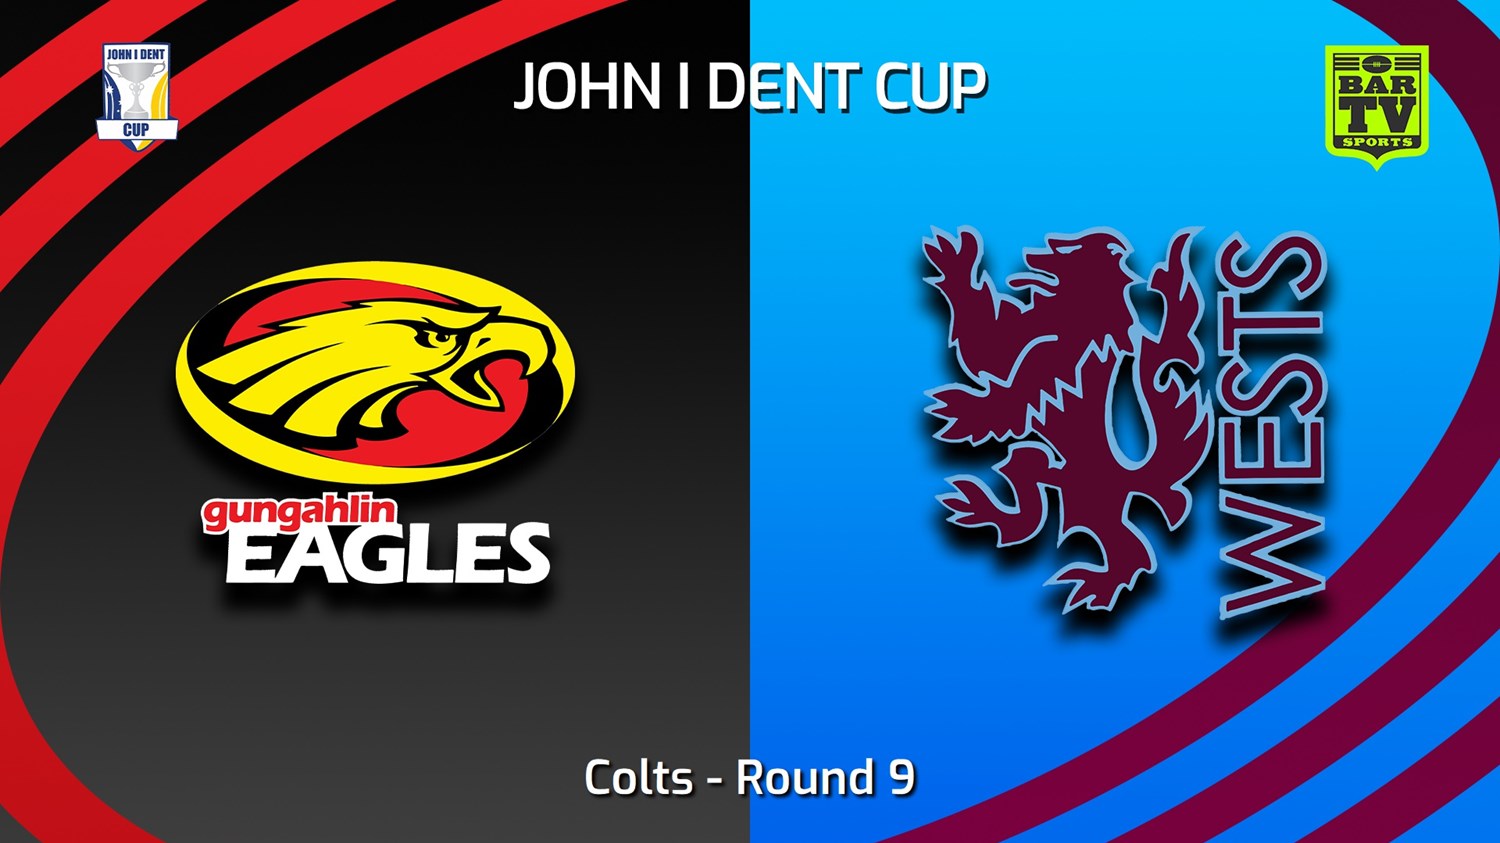 240615-video-John I Dent (ACT) Round 9 - Colts - Gungahlin Eagles v Wests Lions Slate Image